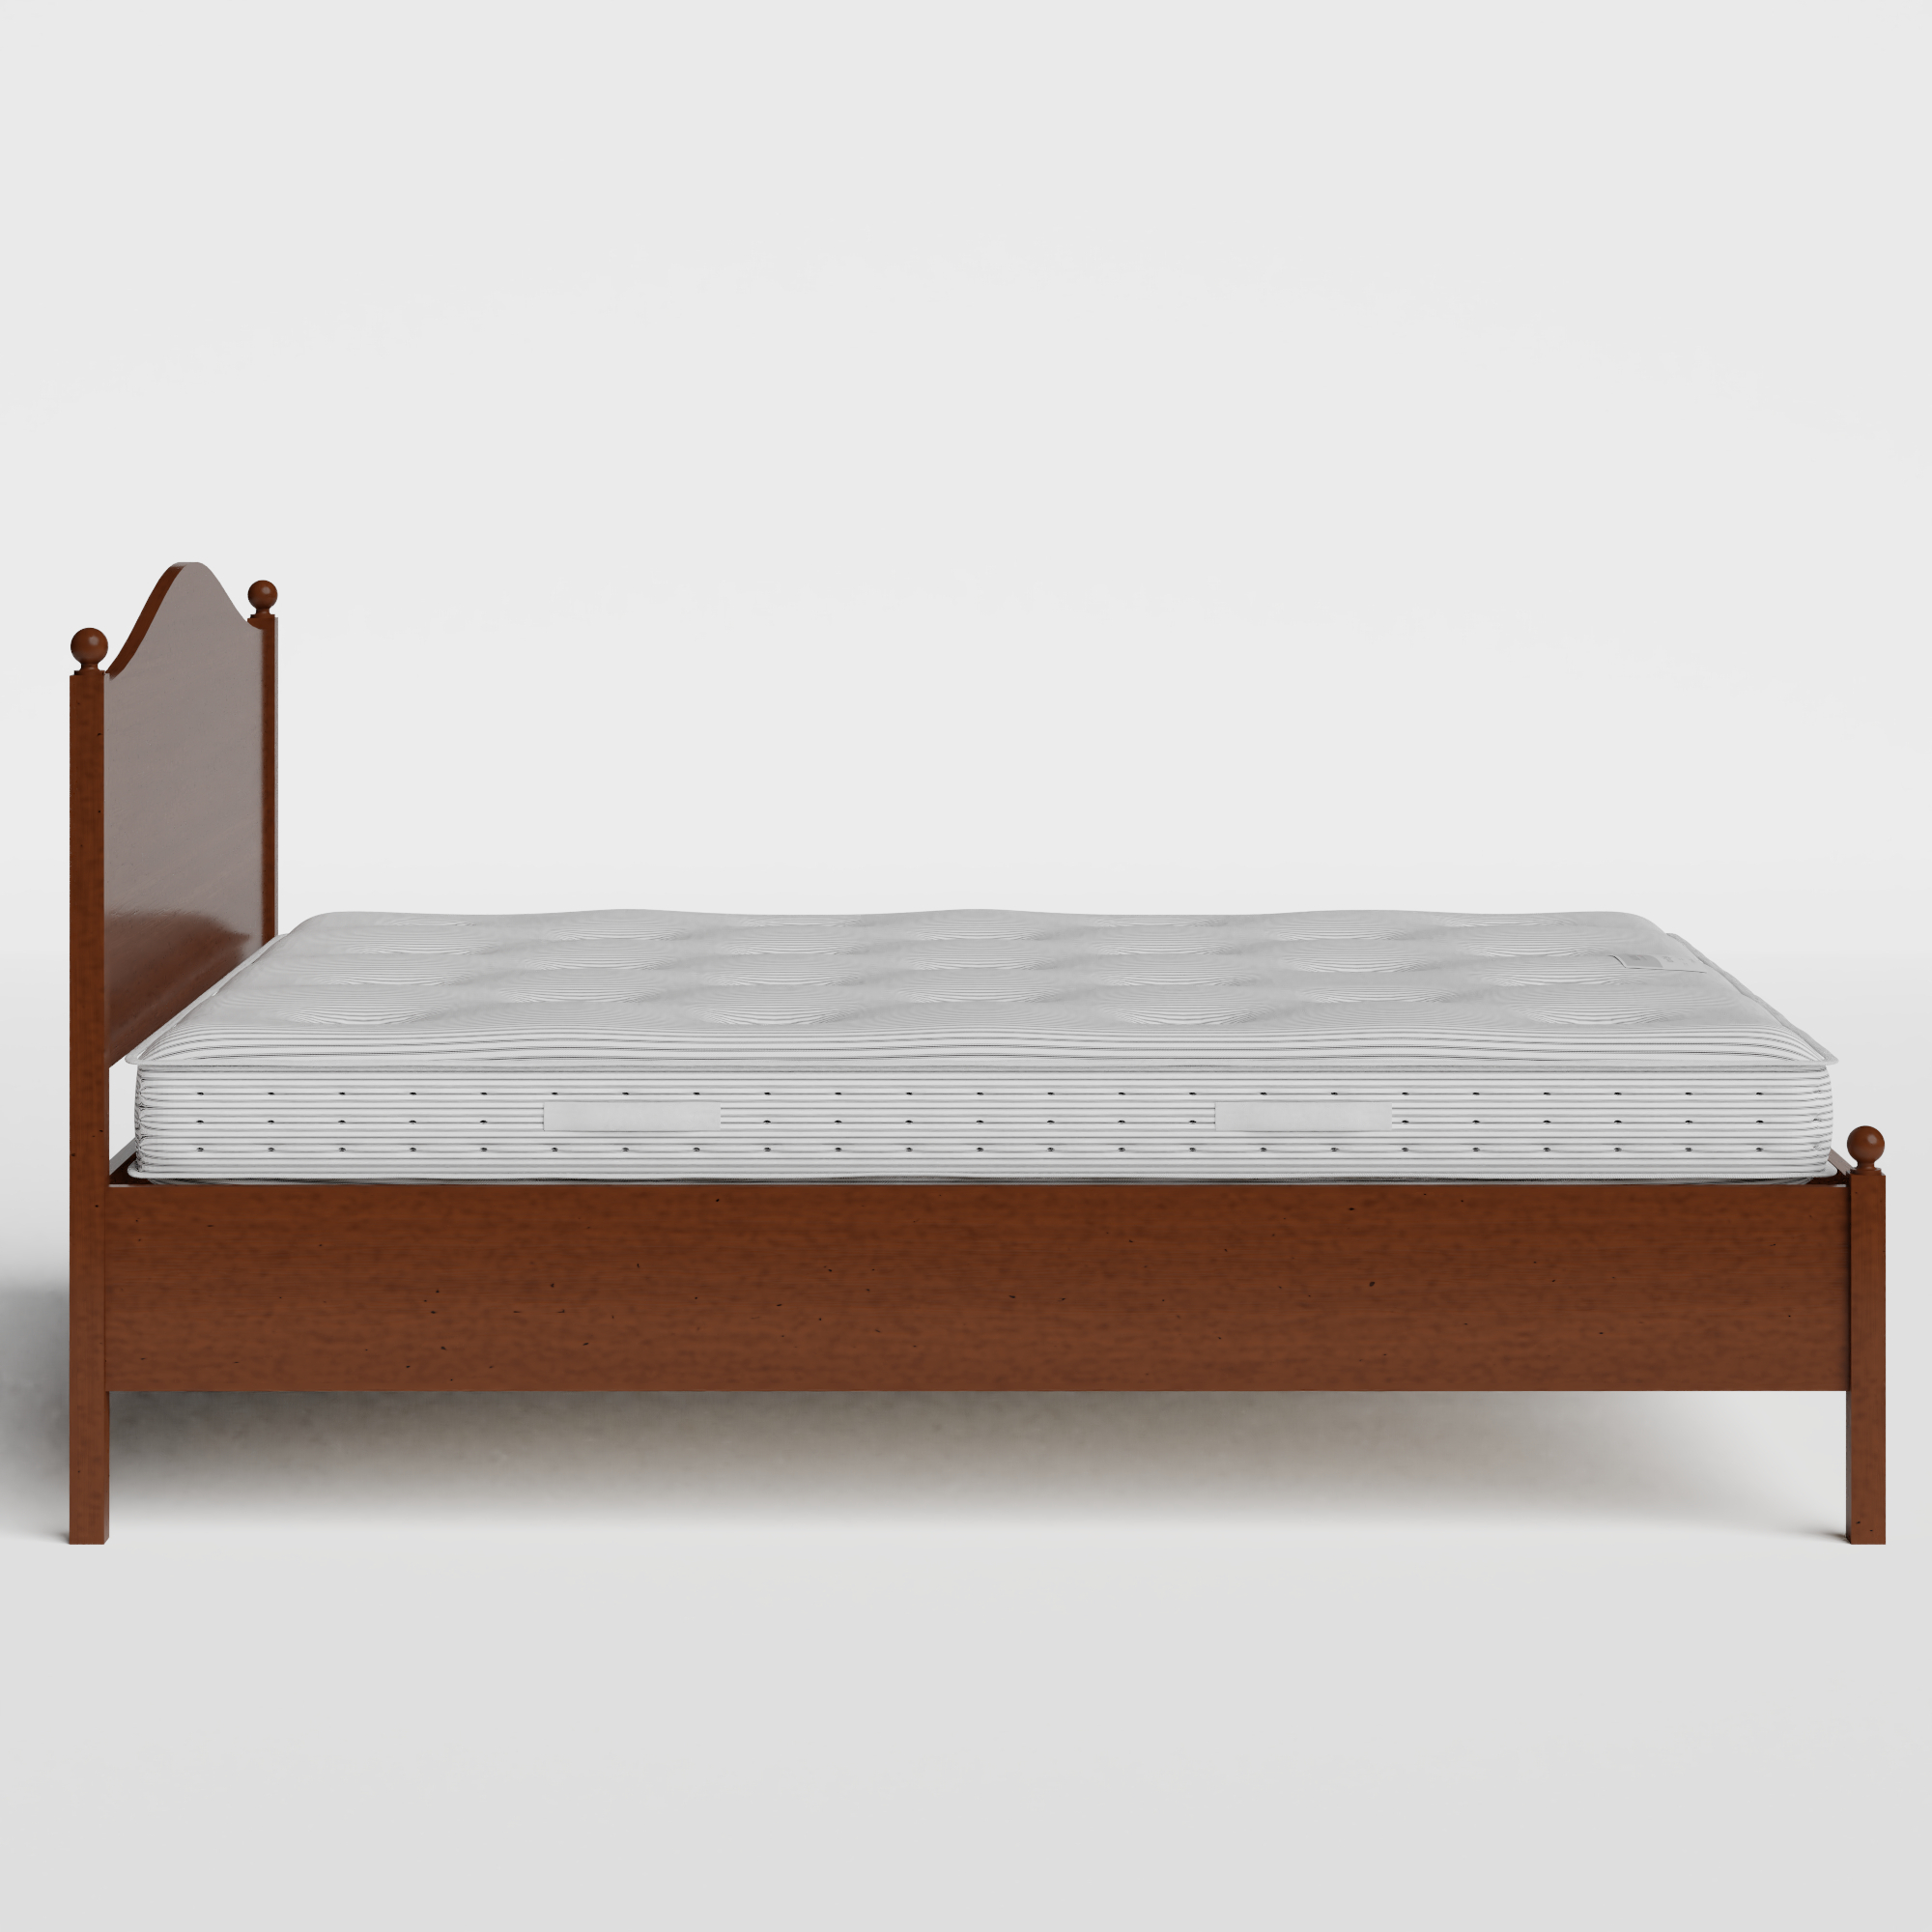 Brady wood bed in dark cherry with Juno mattress